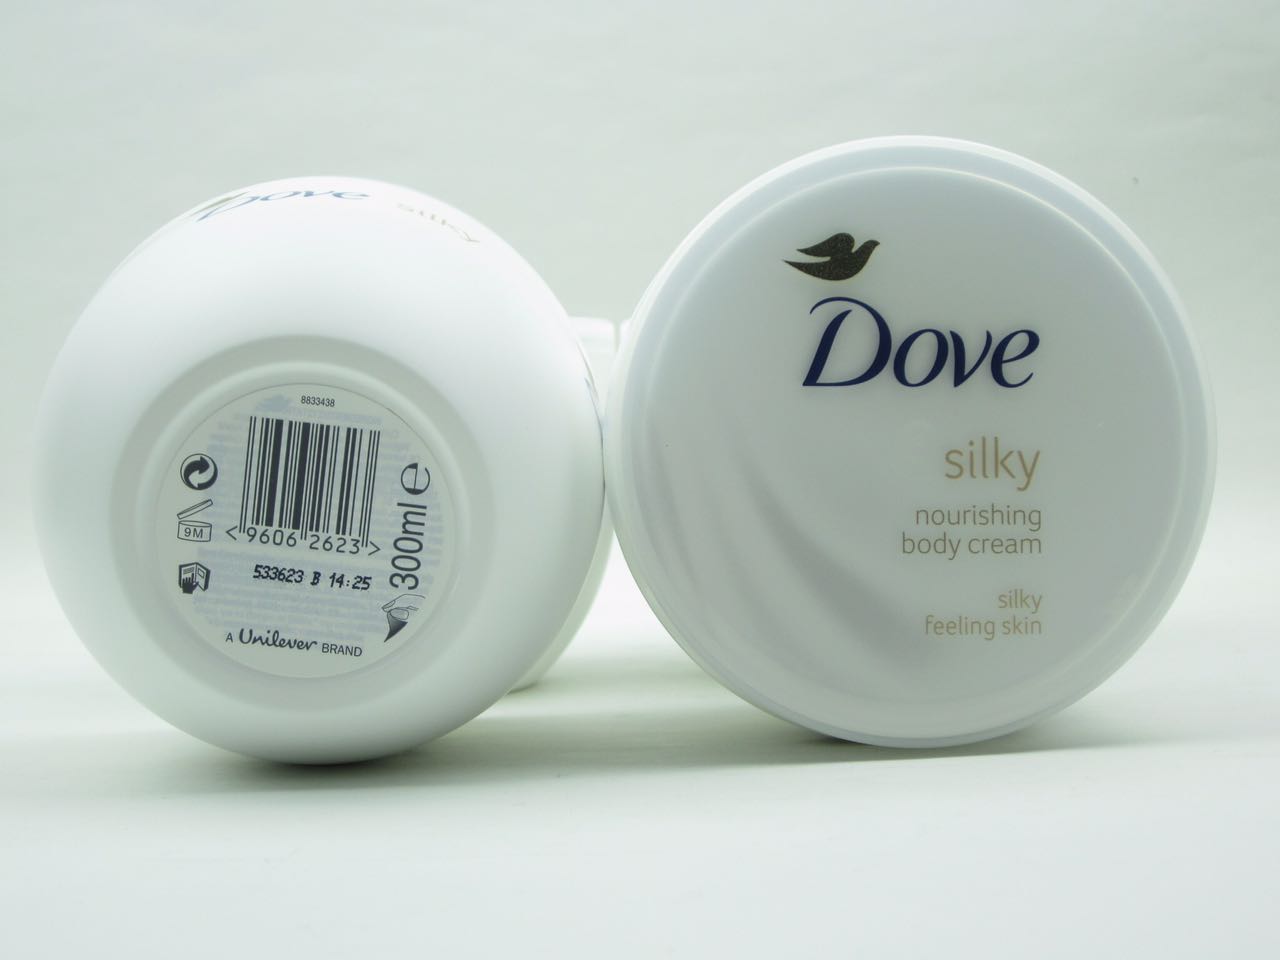 24196 - Dove Cream Silky offer Singapore